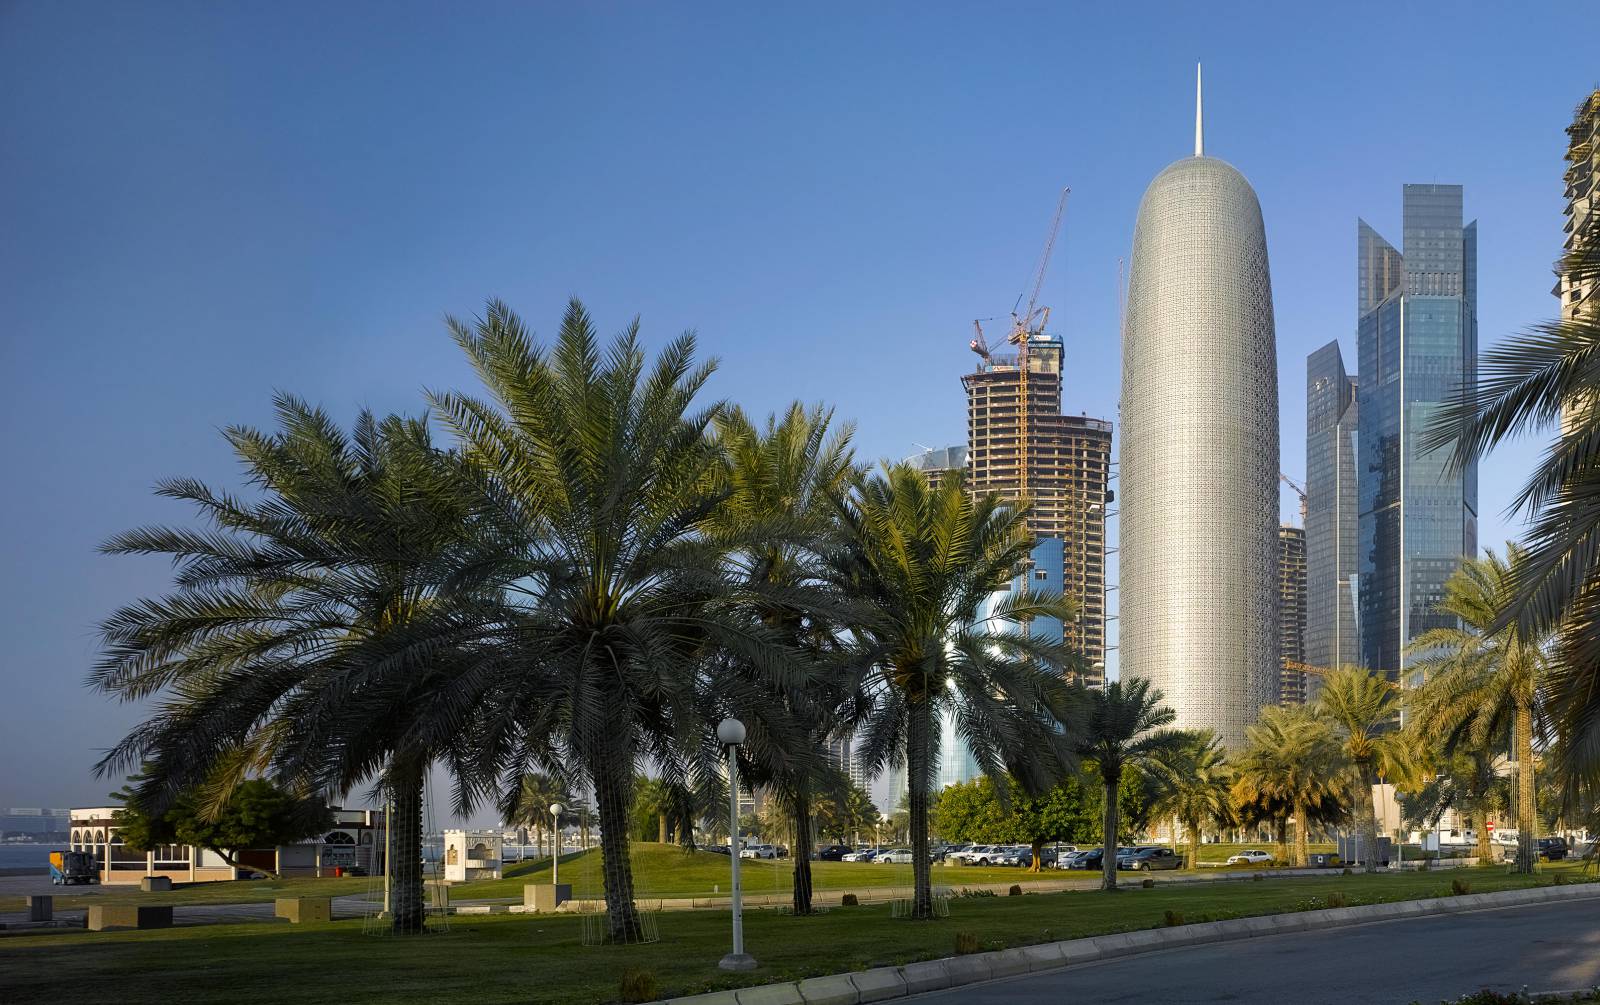 Doha High Rose Office Tower (Burj Qatar)